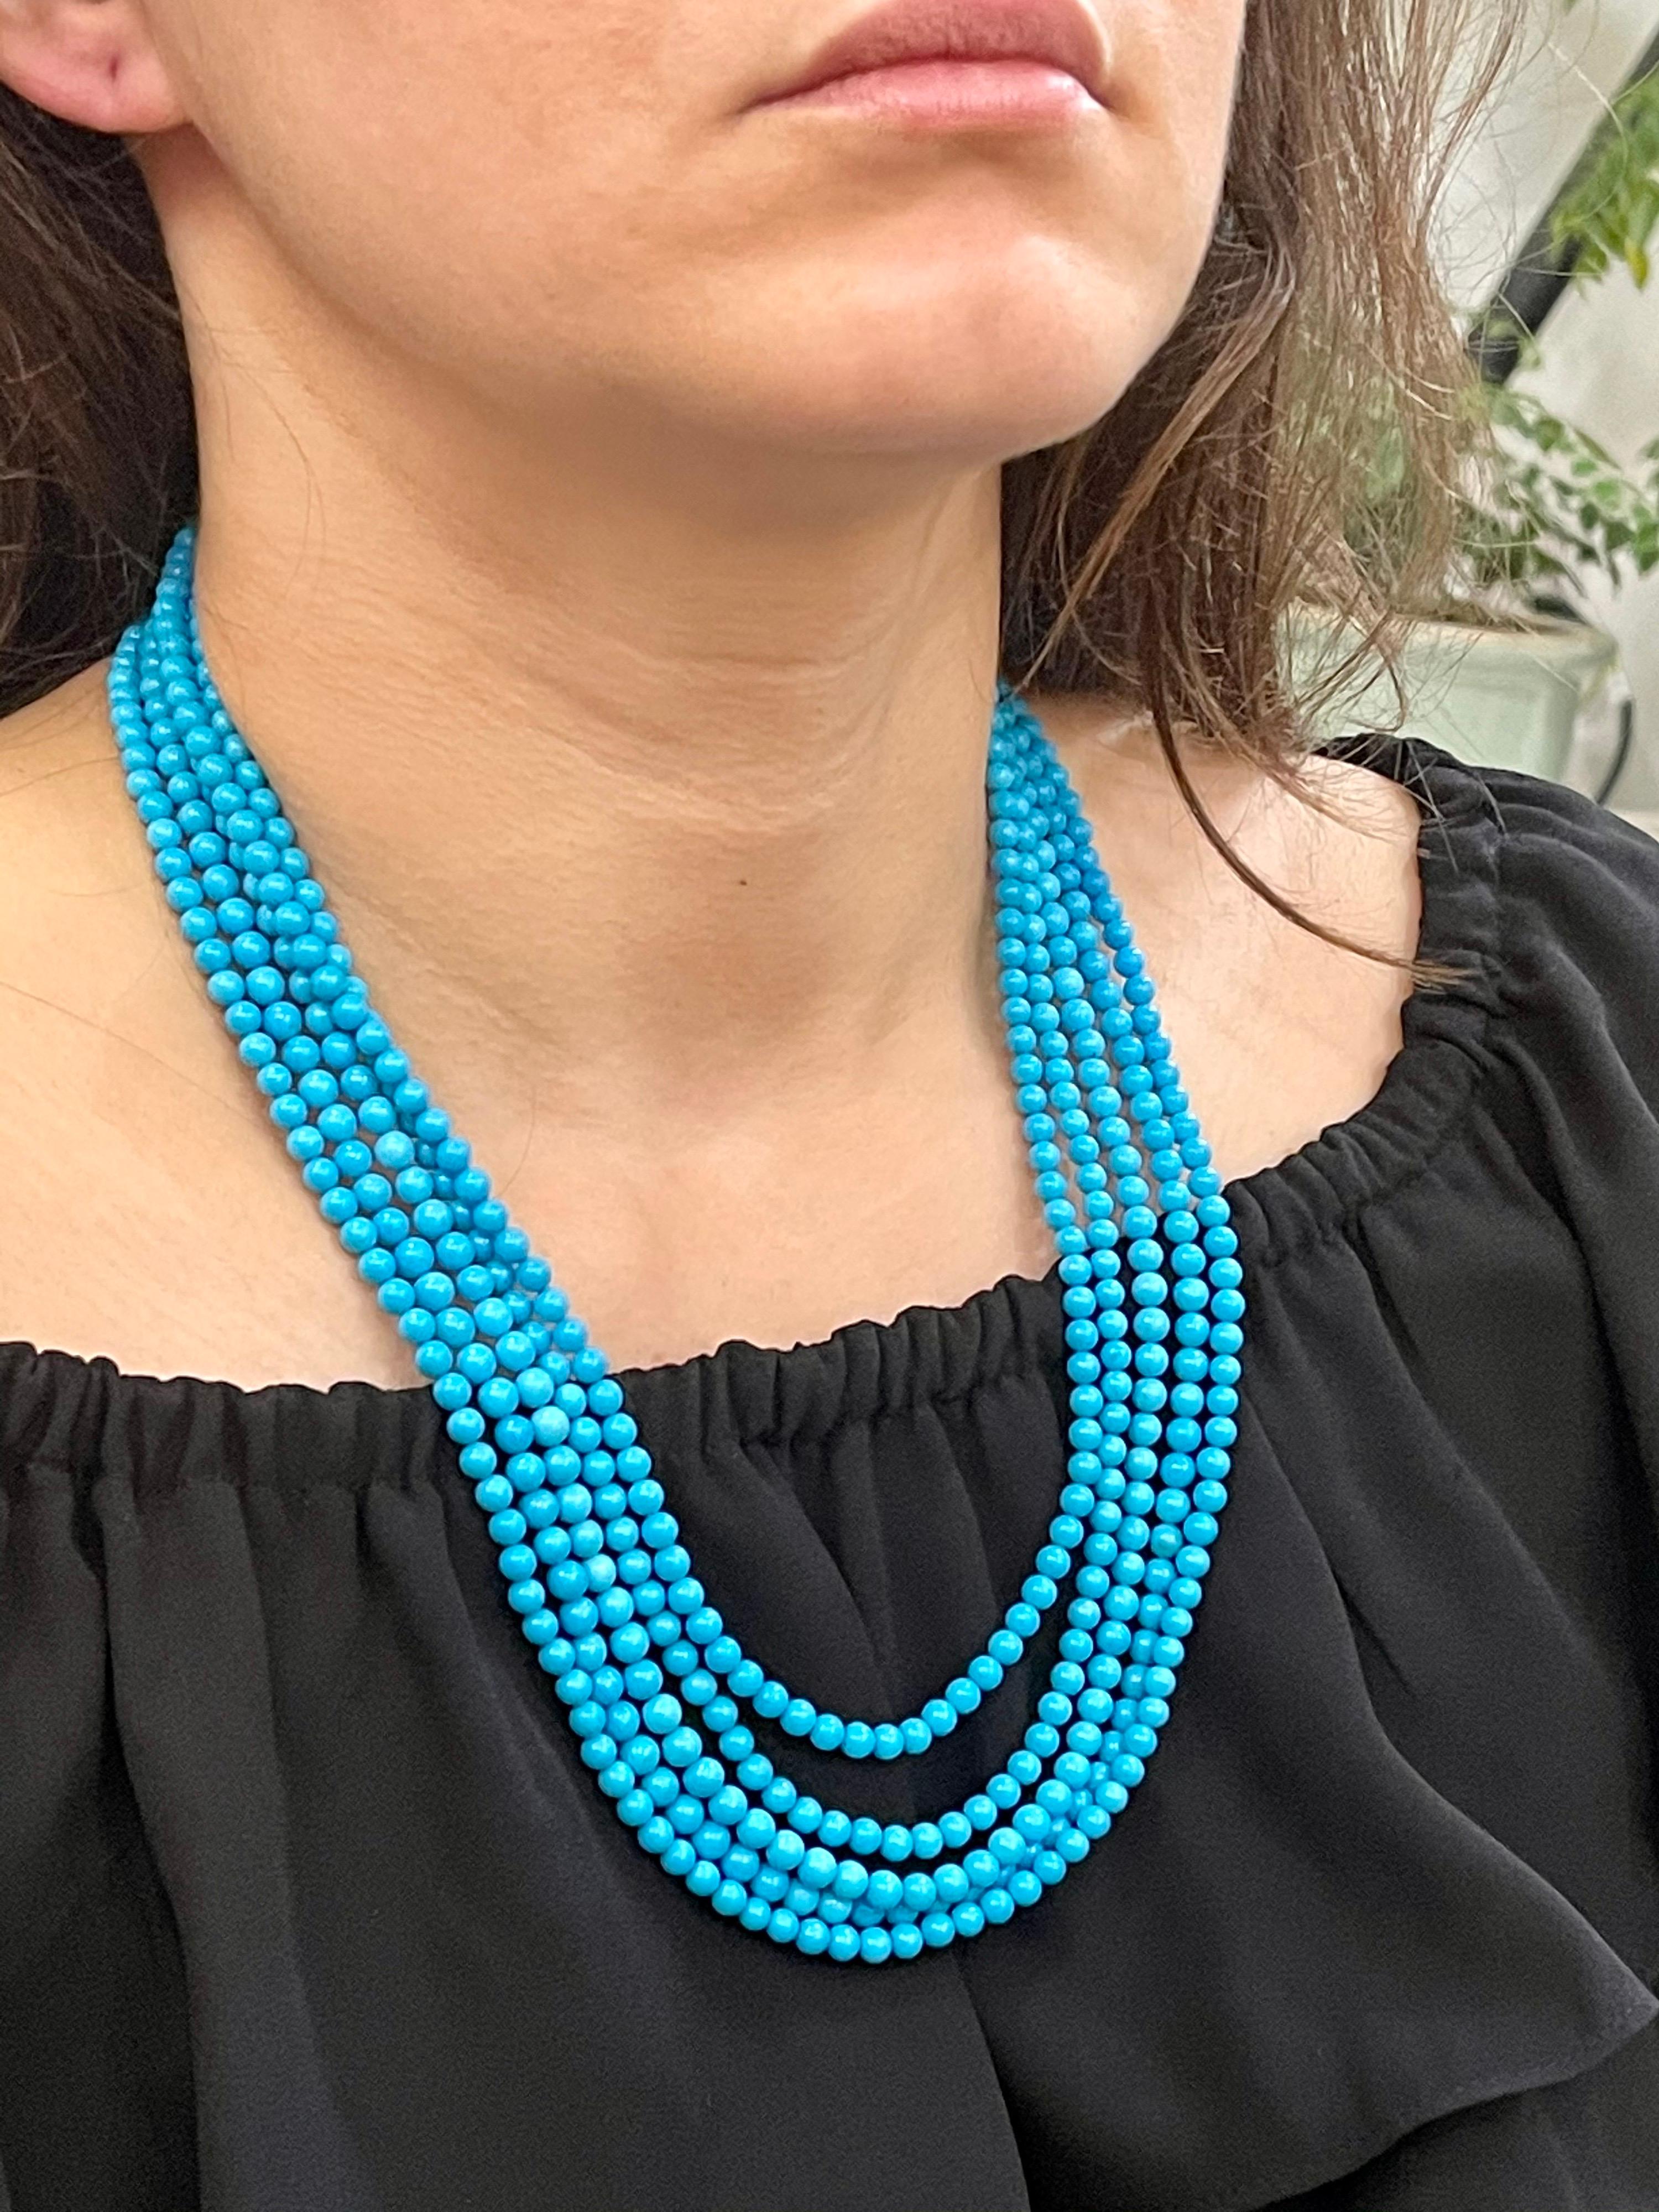 465 Carat Natural Sleeping Beauty Turquoise Necklace, Multi Strand 18 Karat Gold 3